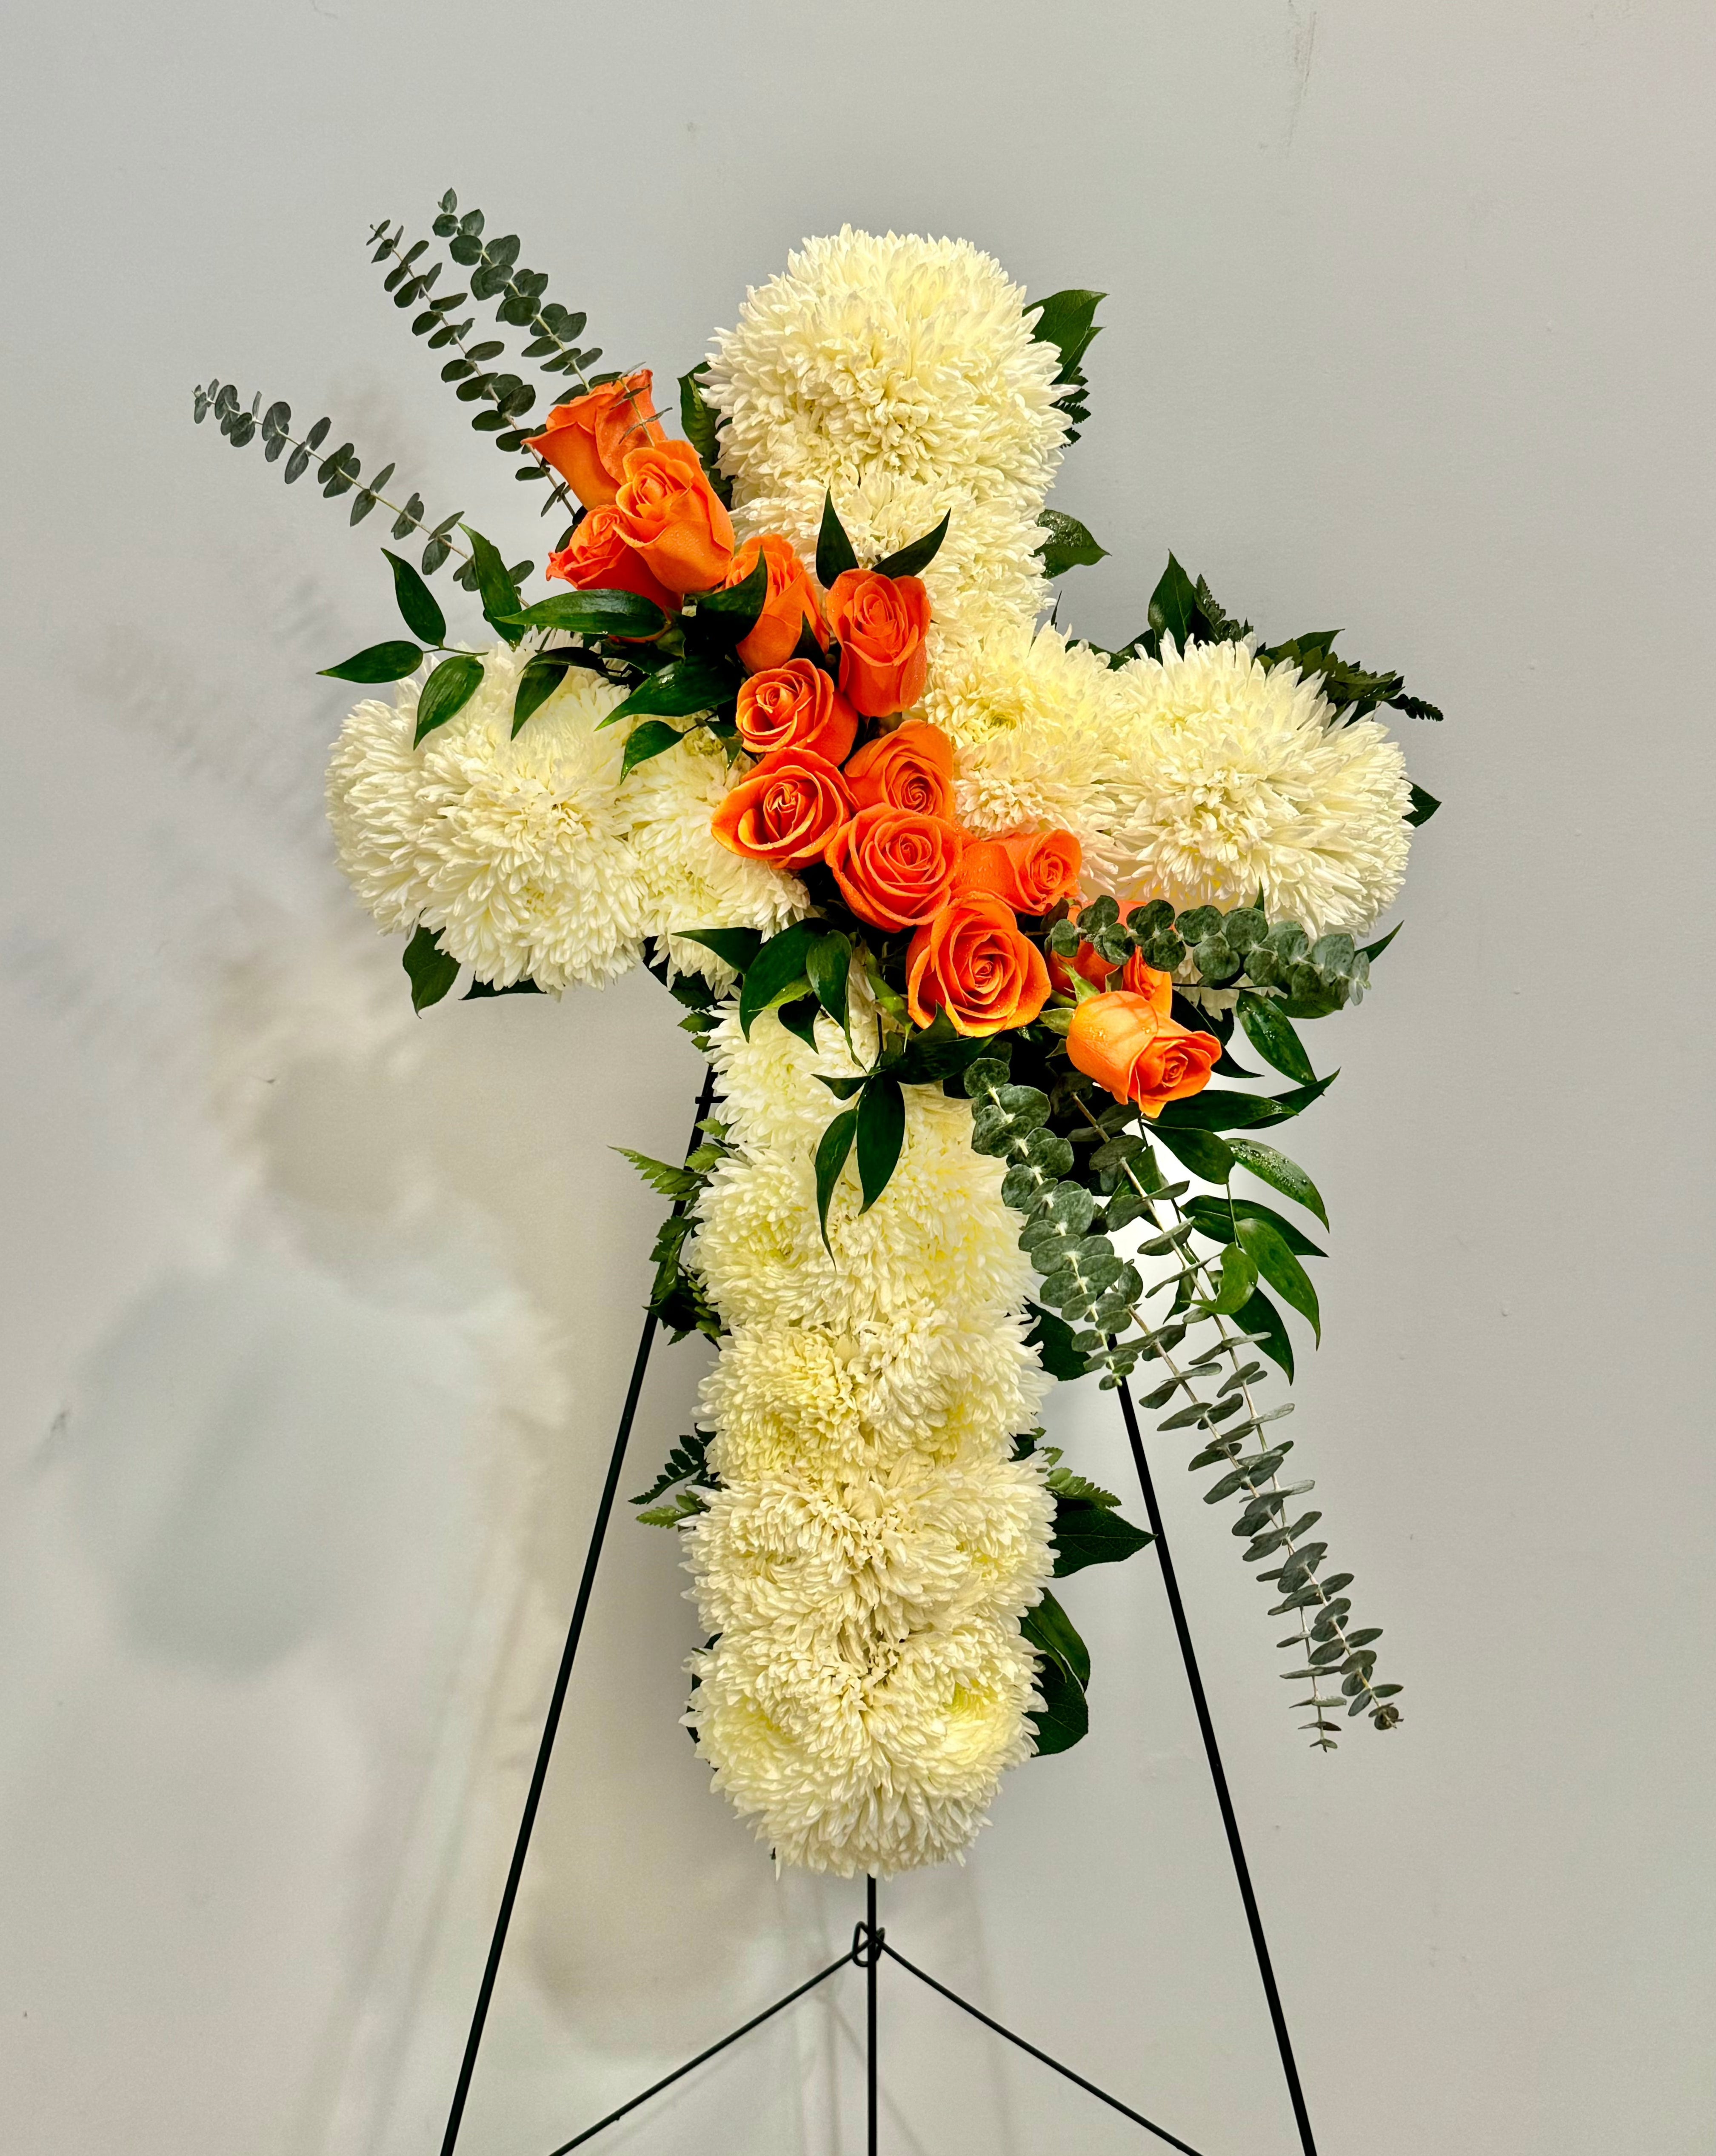 A white cross spray with orange roses.